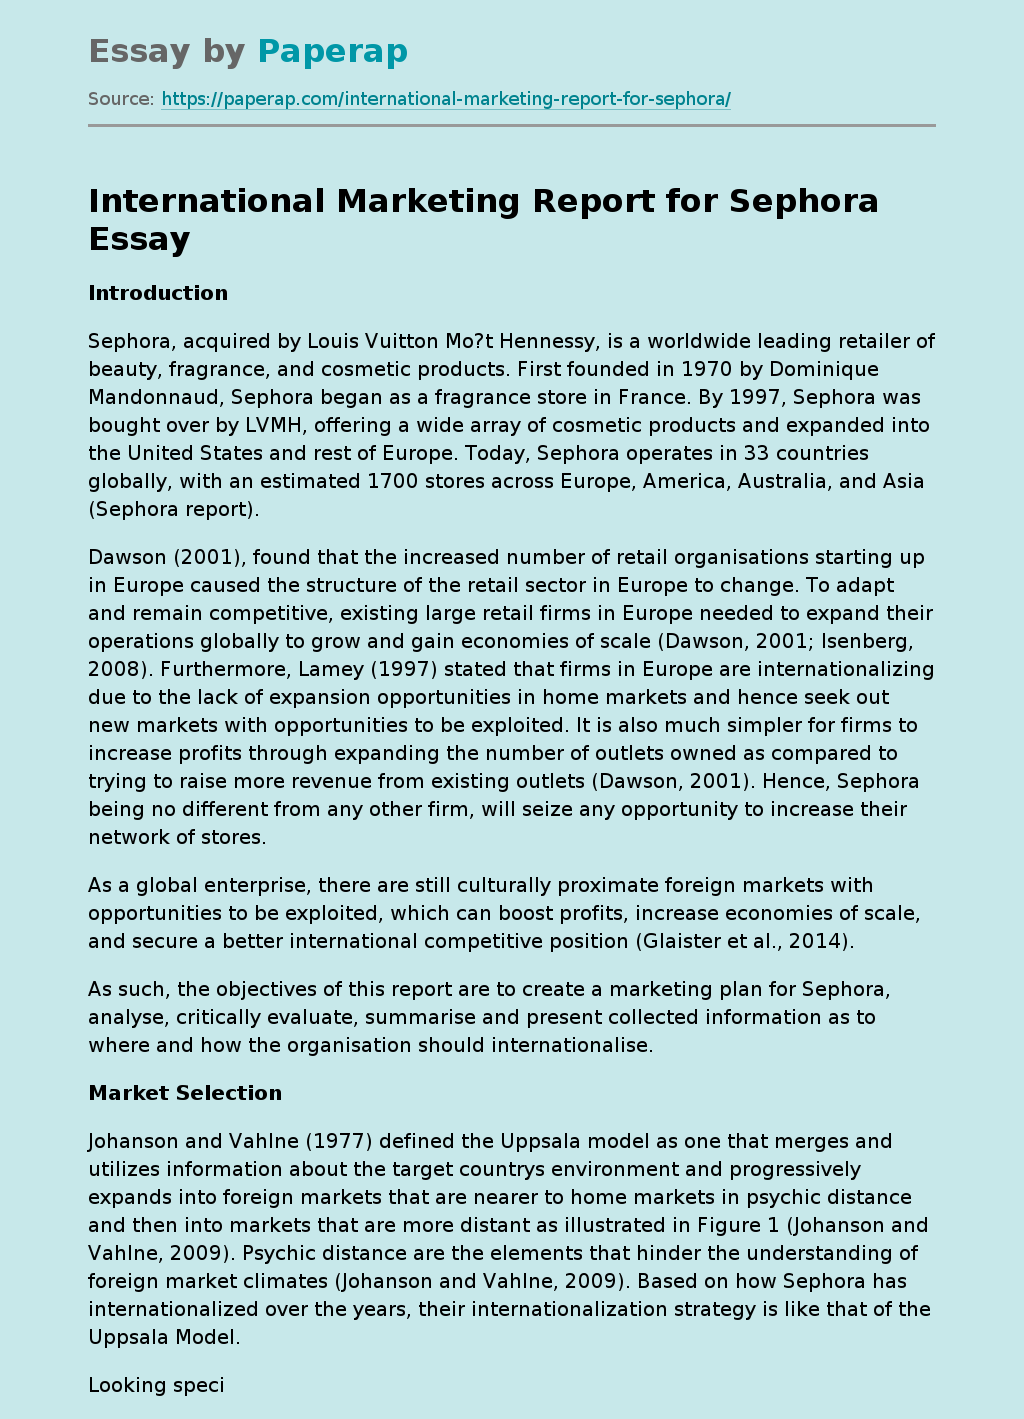 International Marketing Report for Sephora